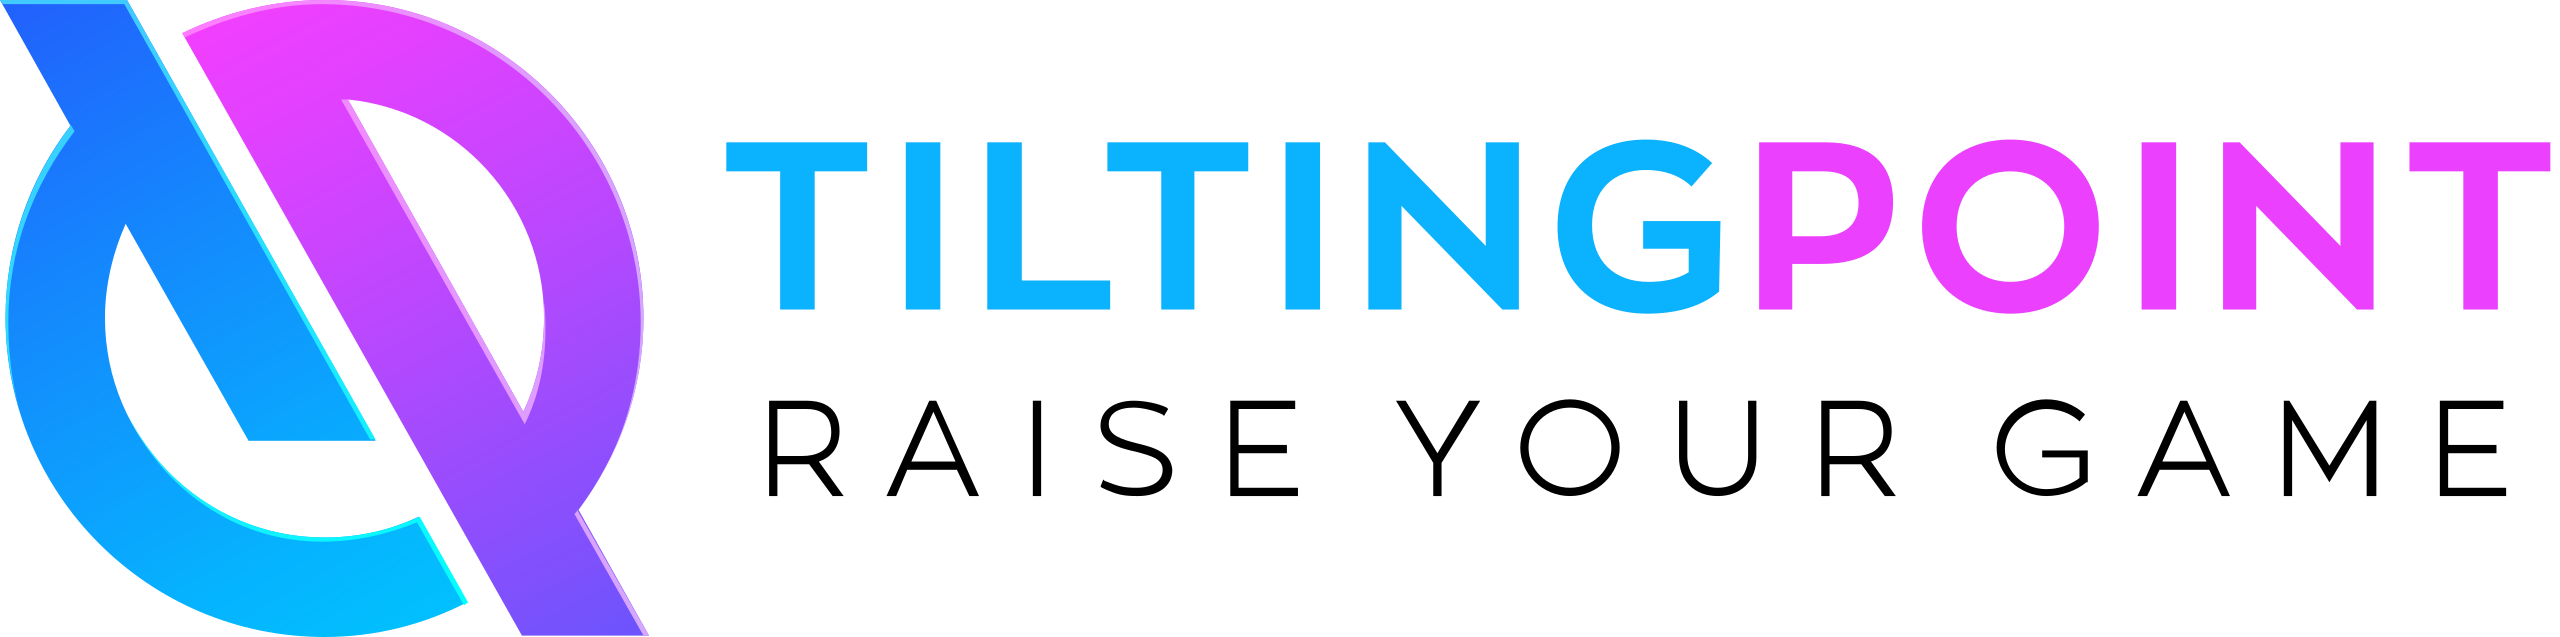 Tilting_Point_logo_2020.svg